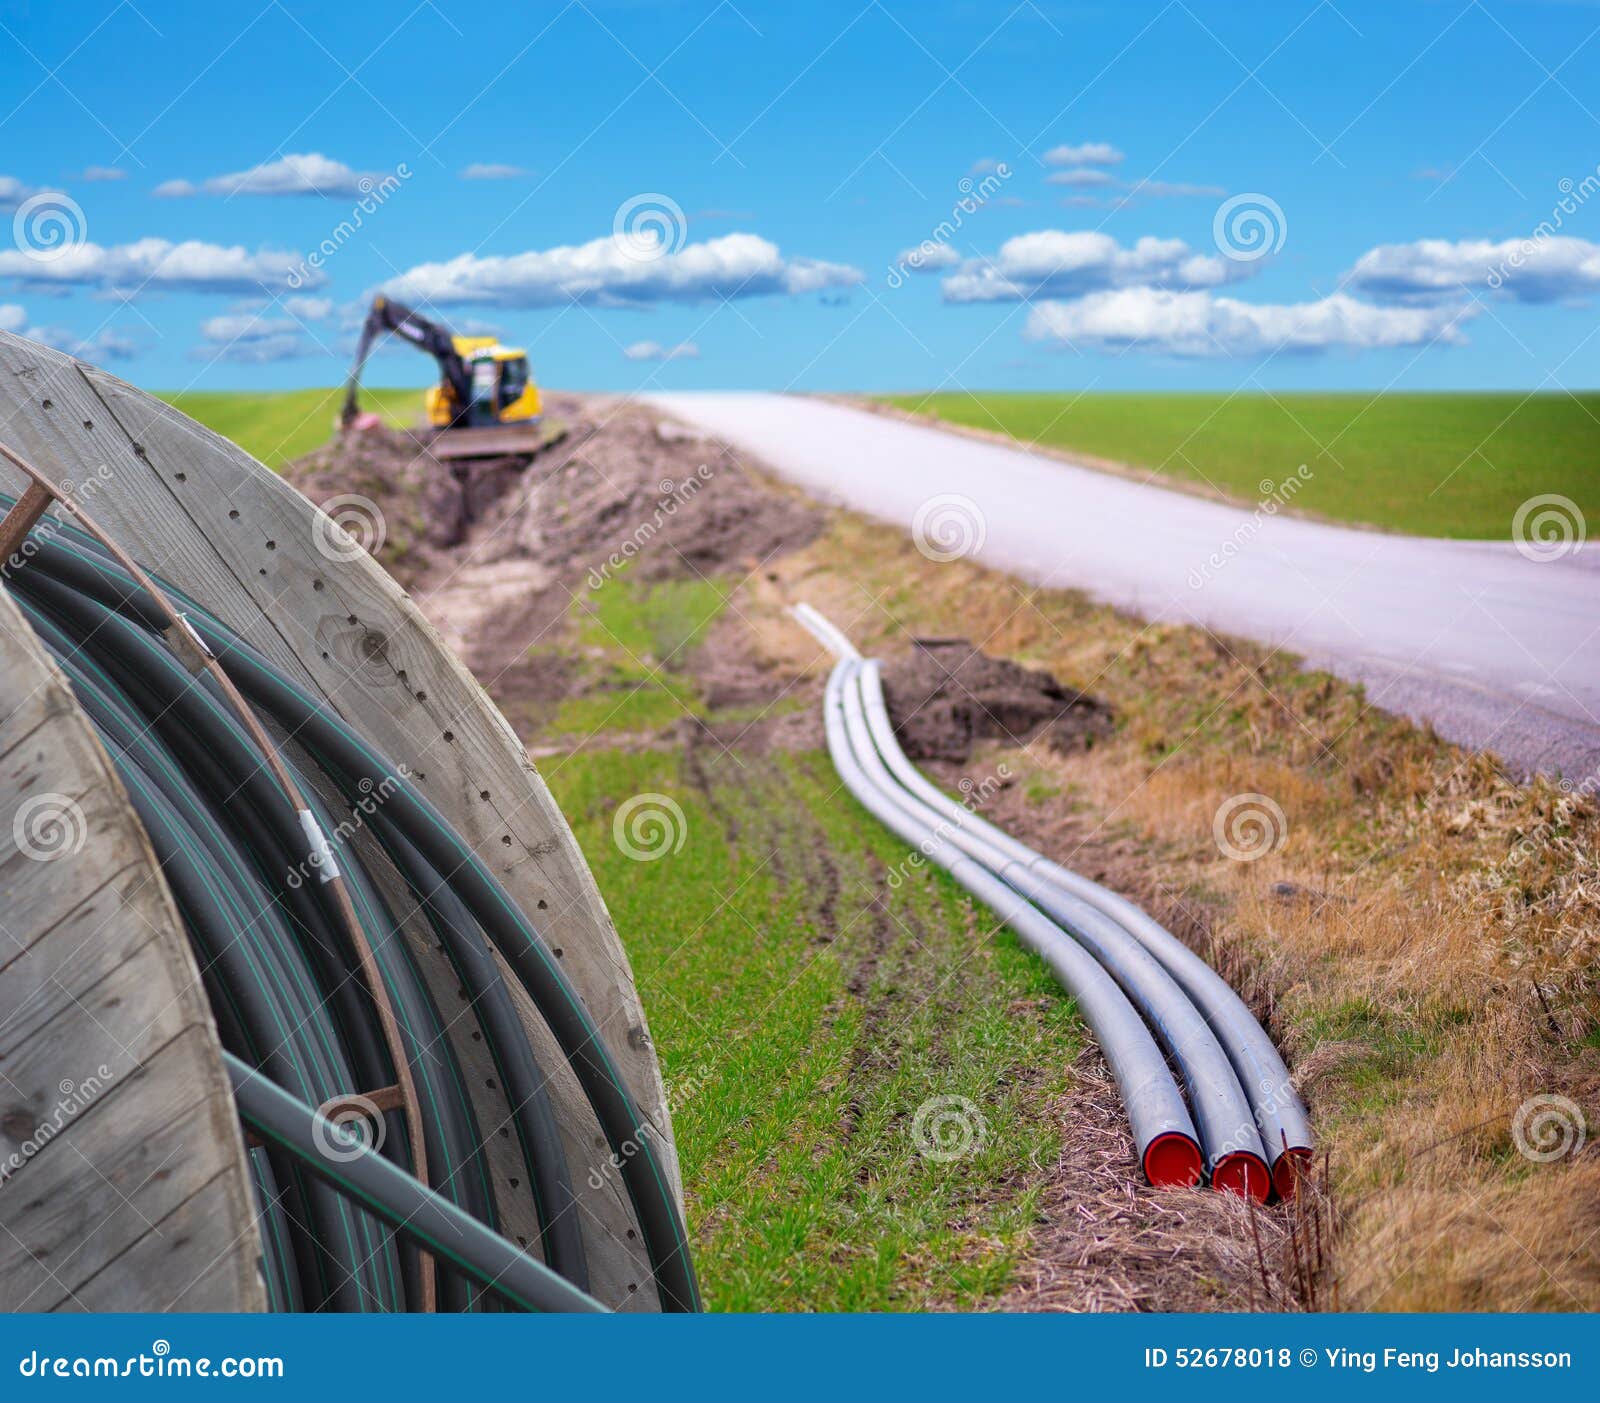 digging for broadband